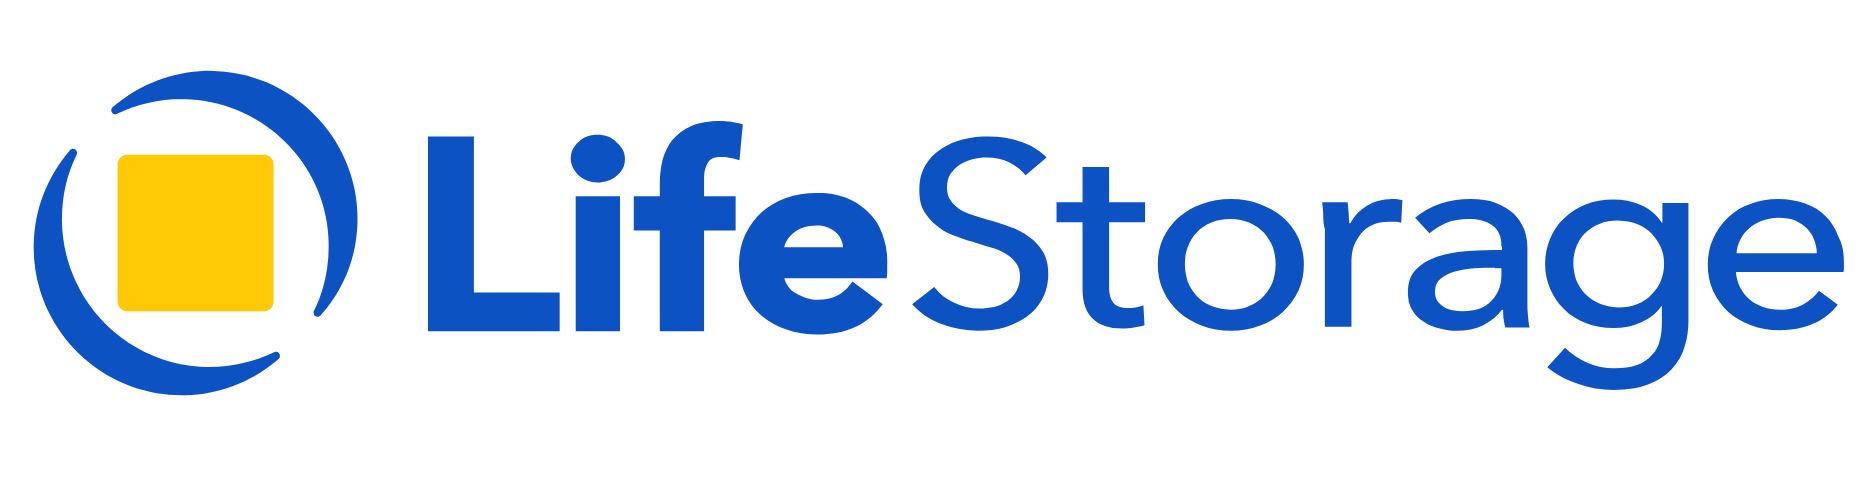 Life Storage, Inc. Company Logo